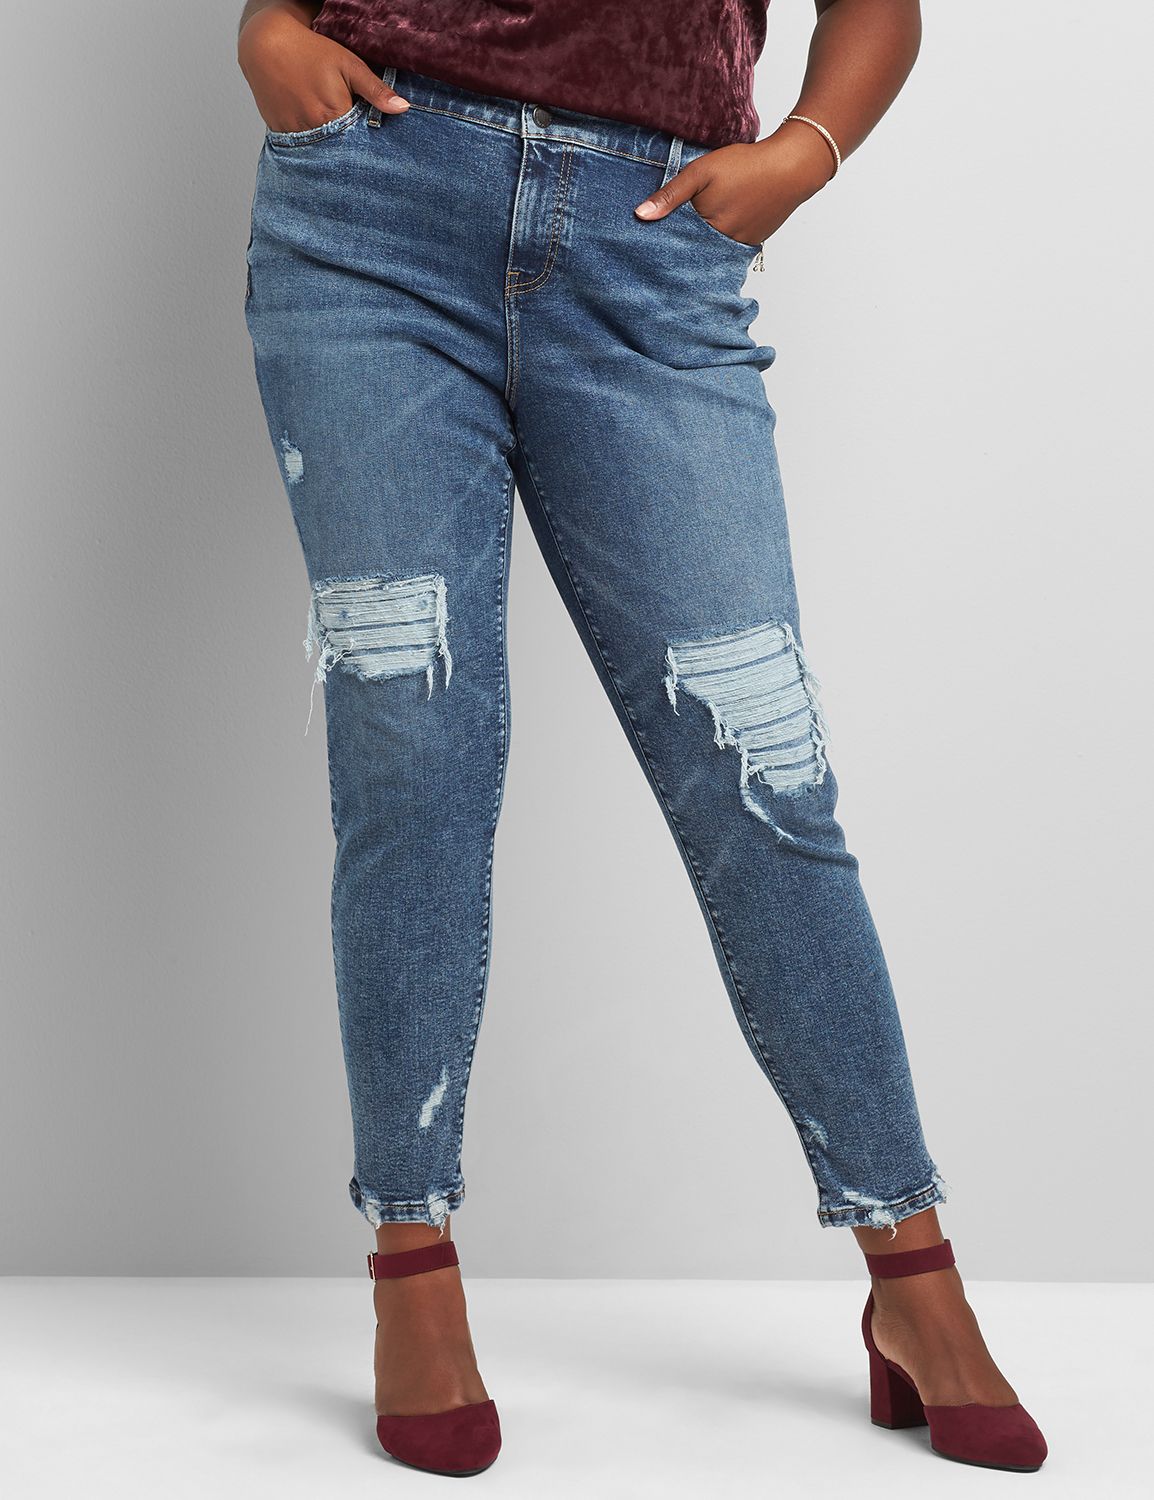 size 20 boyfriend jeans